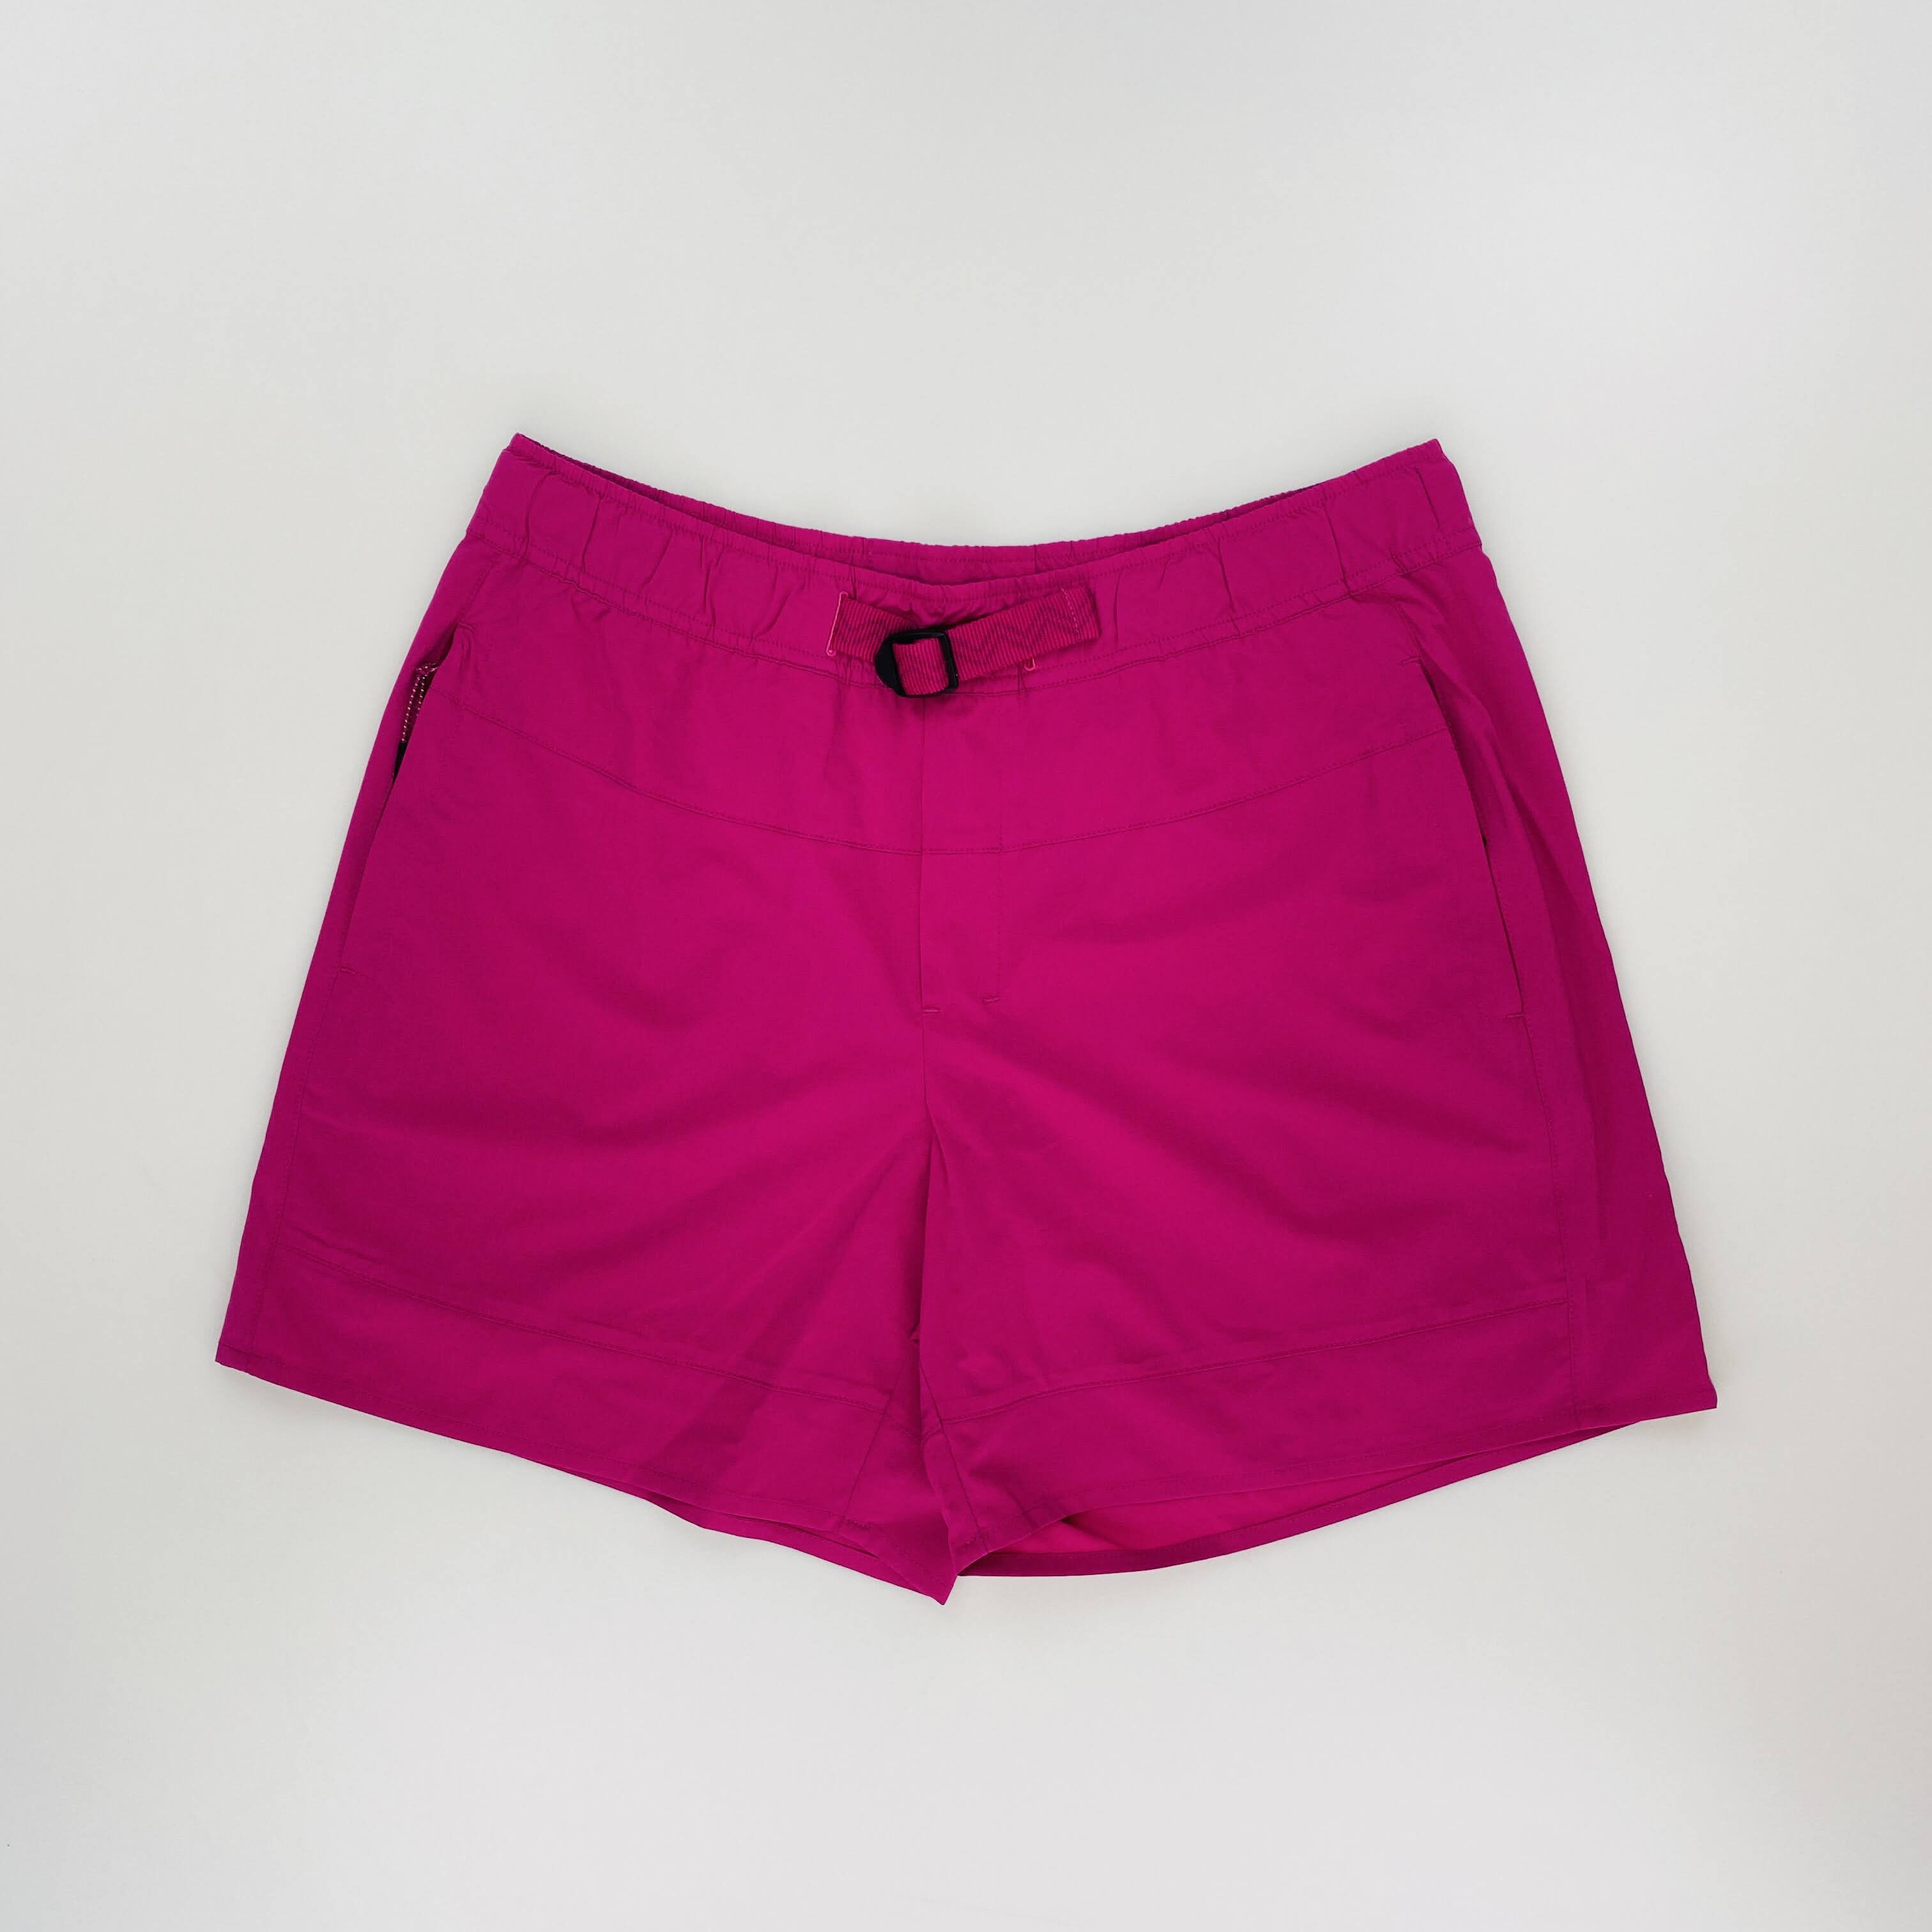 Kari Traa Ane Shorts - Second Hand Shorts - Women's - Pink - M | Hardloop